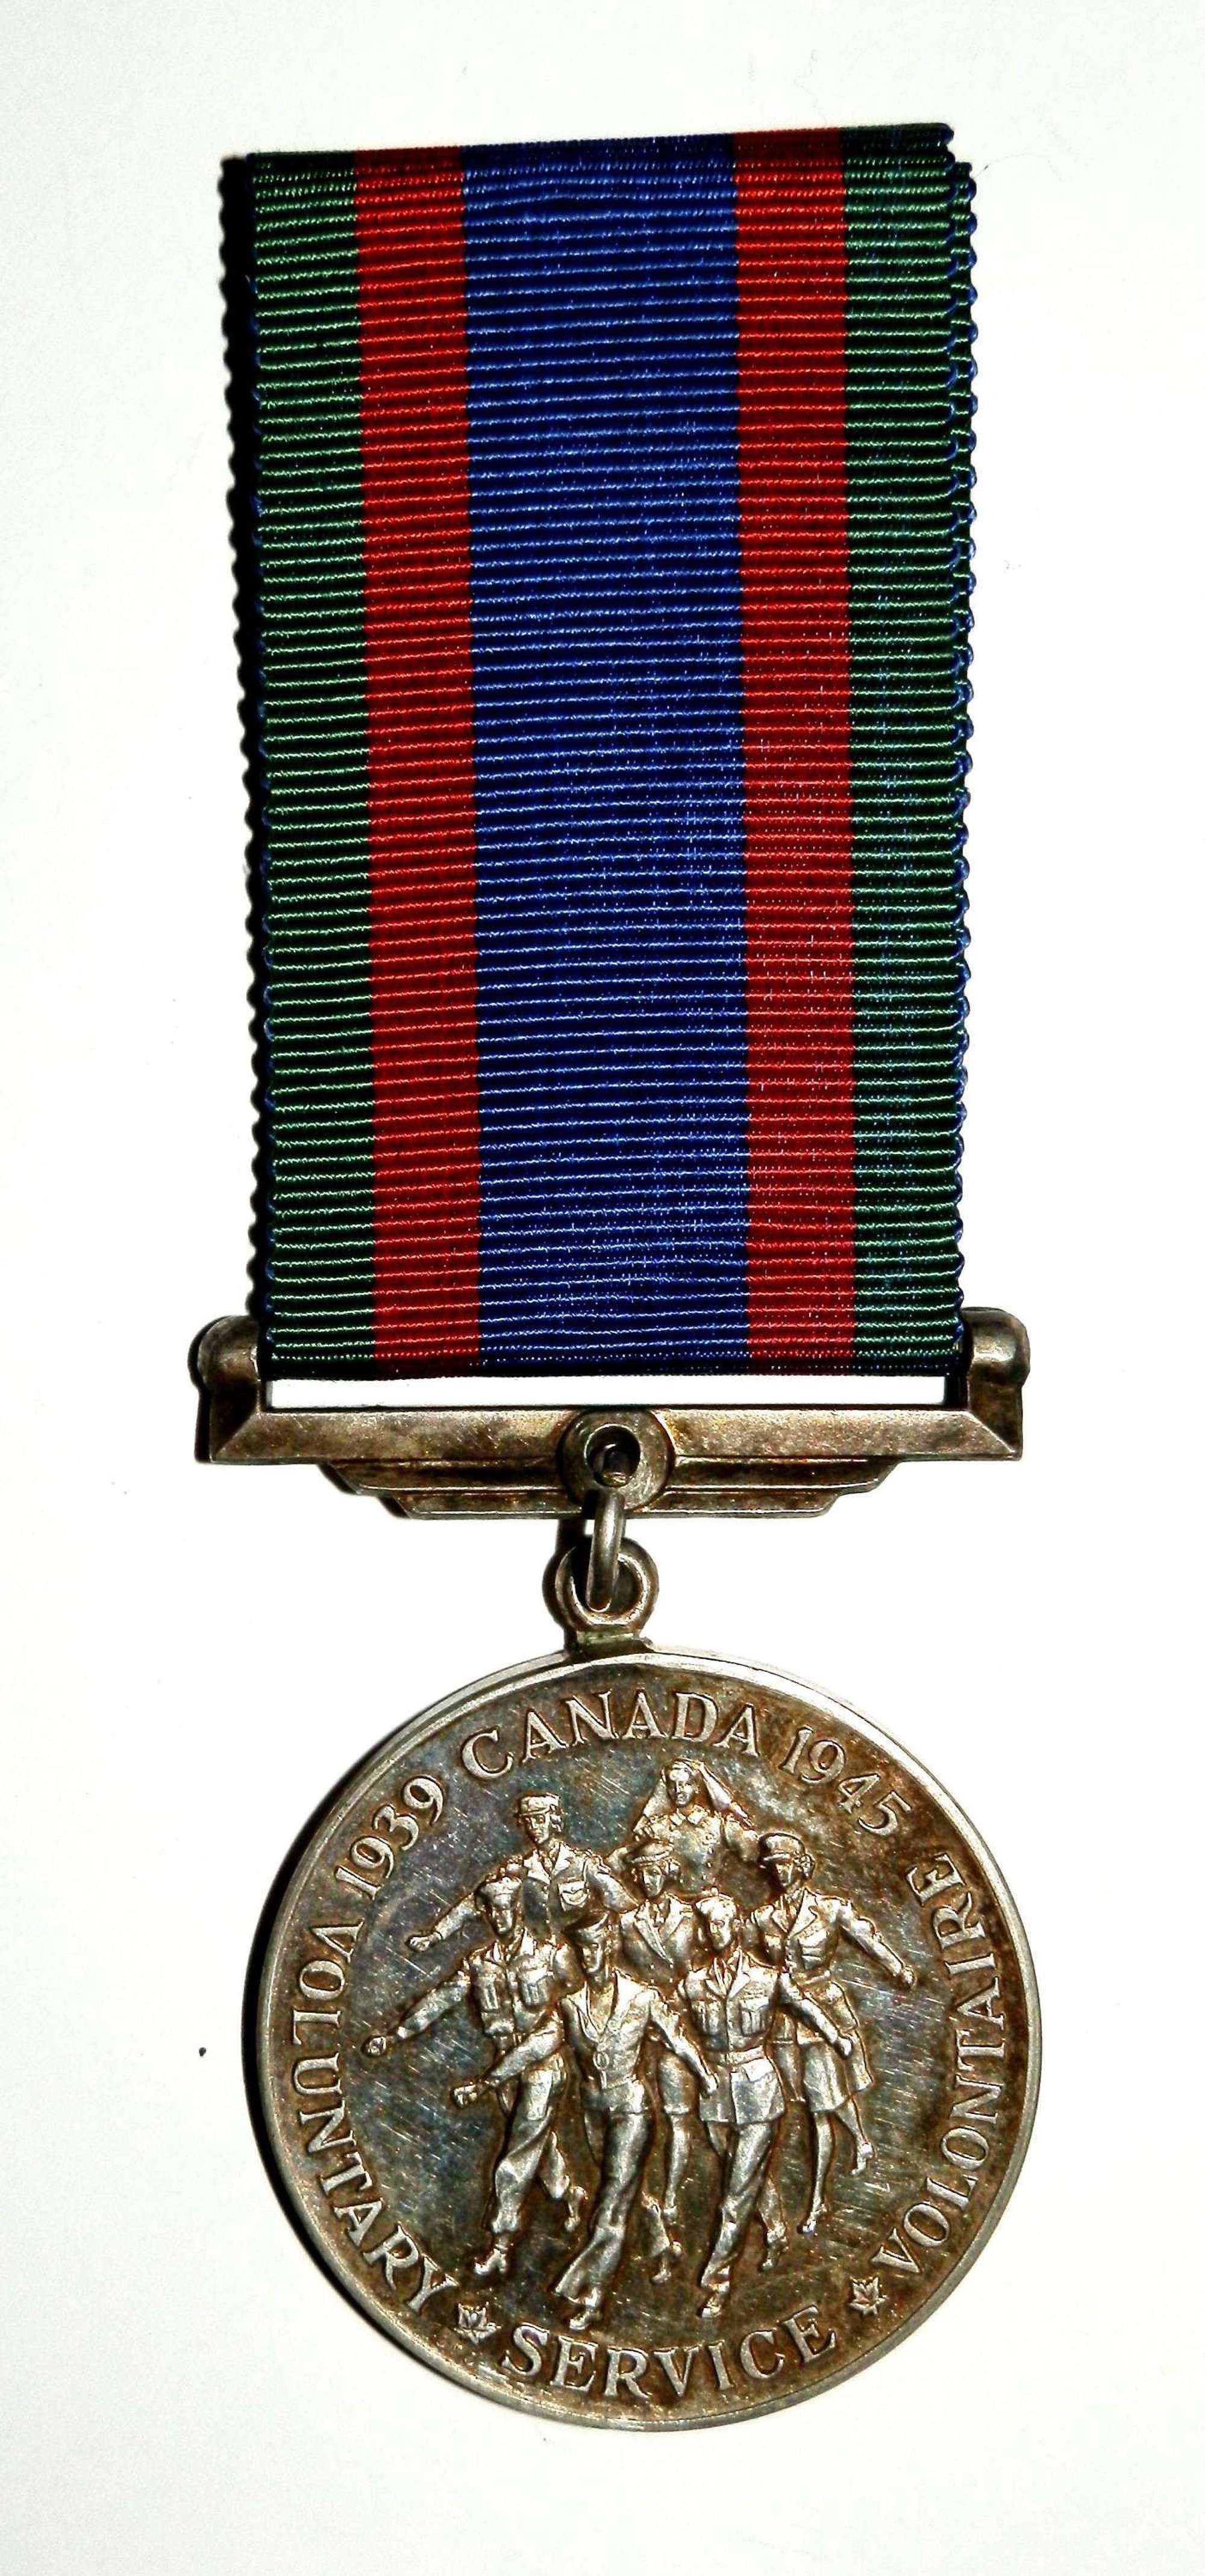 Canadian Volunteer Service Medal 1939-45.